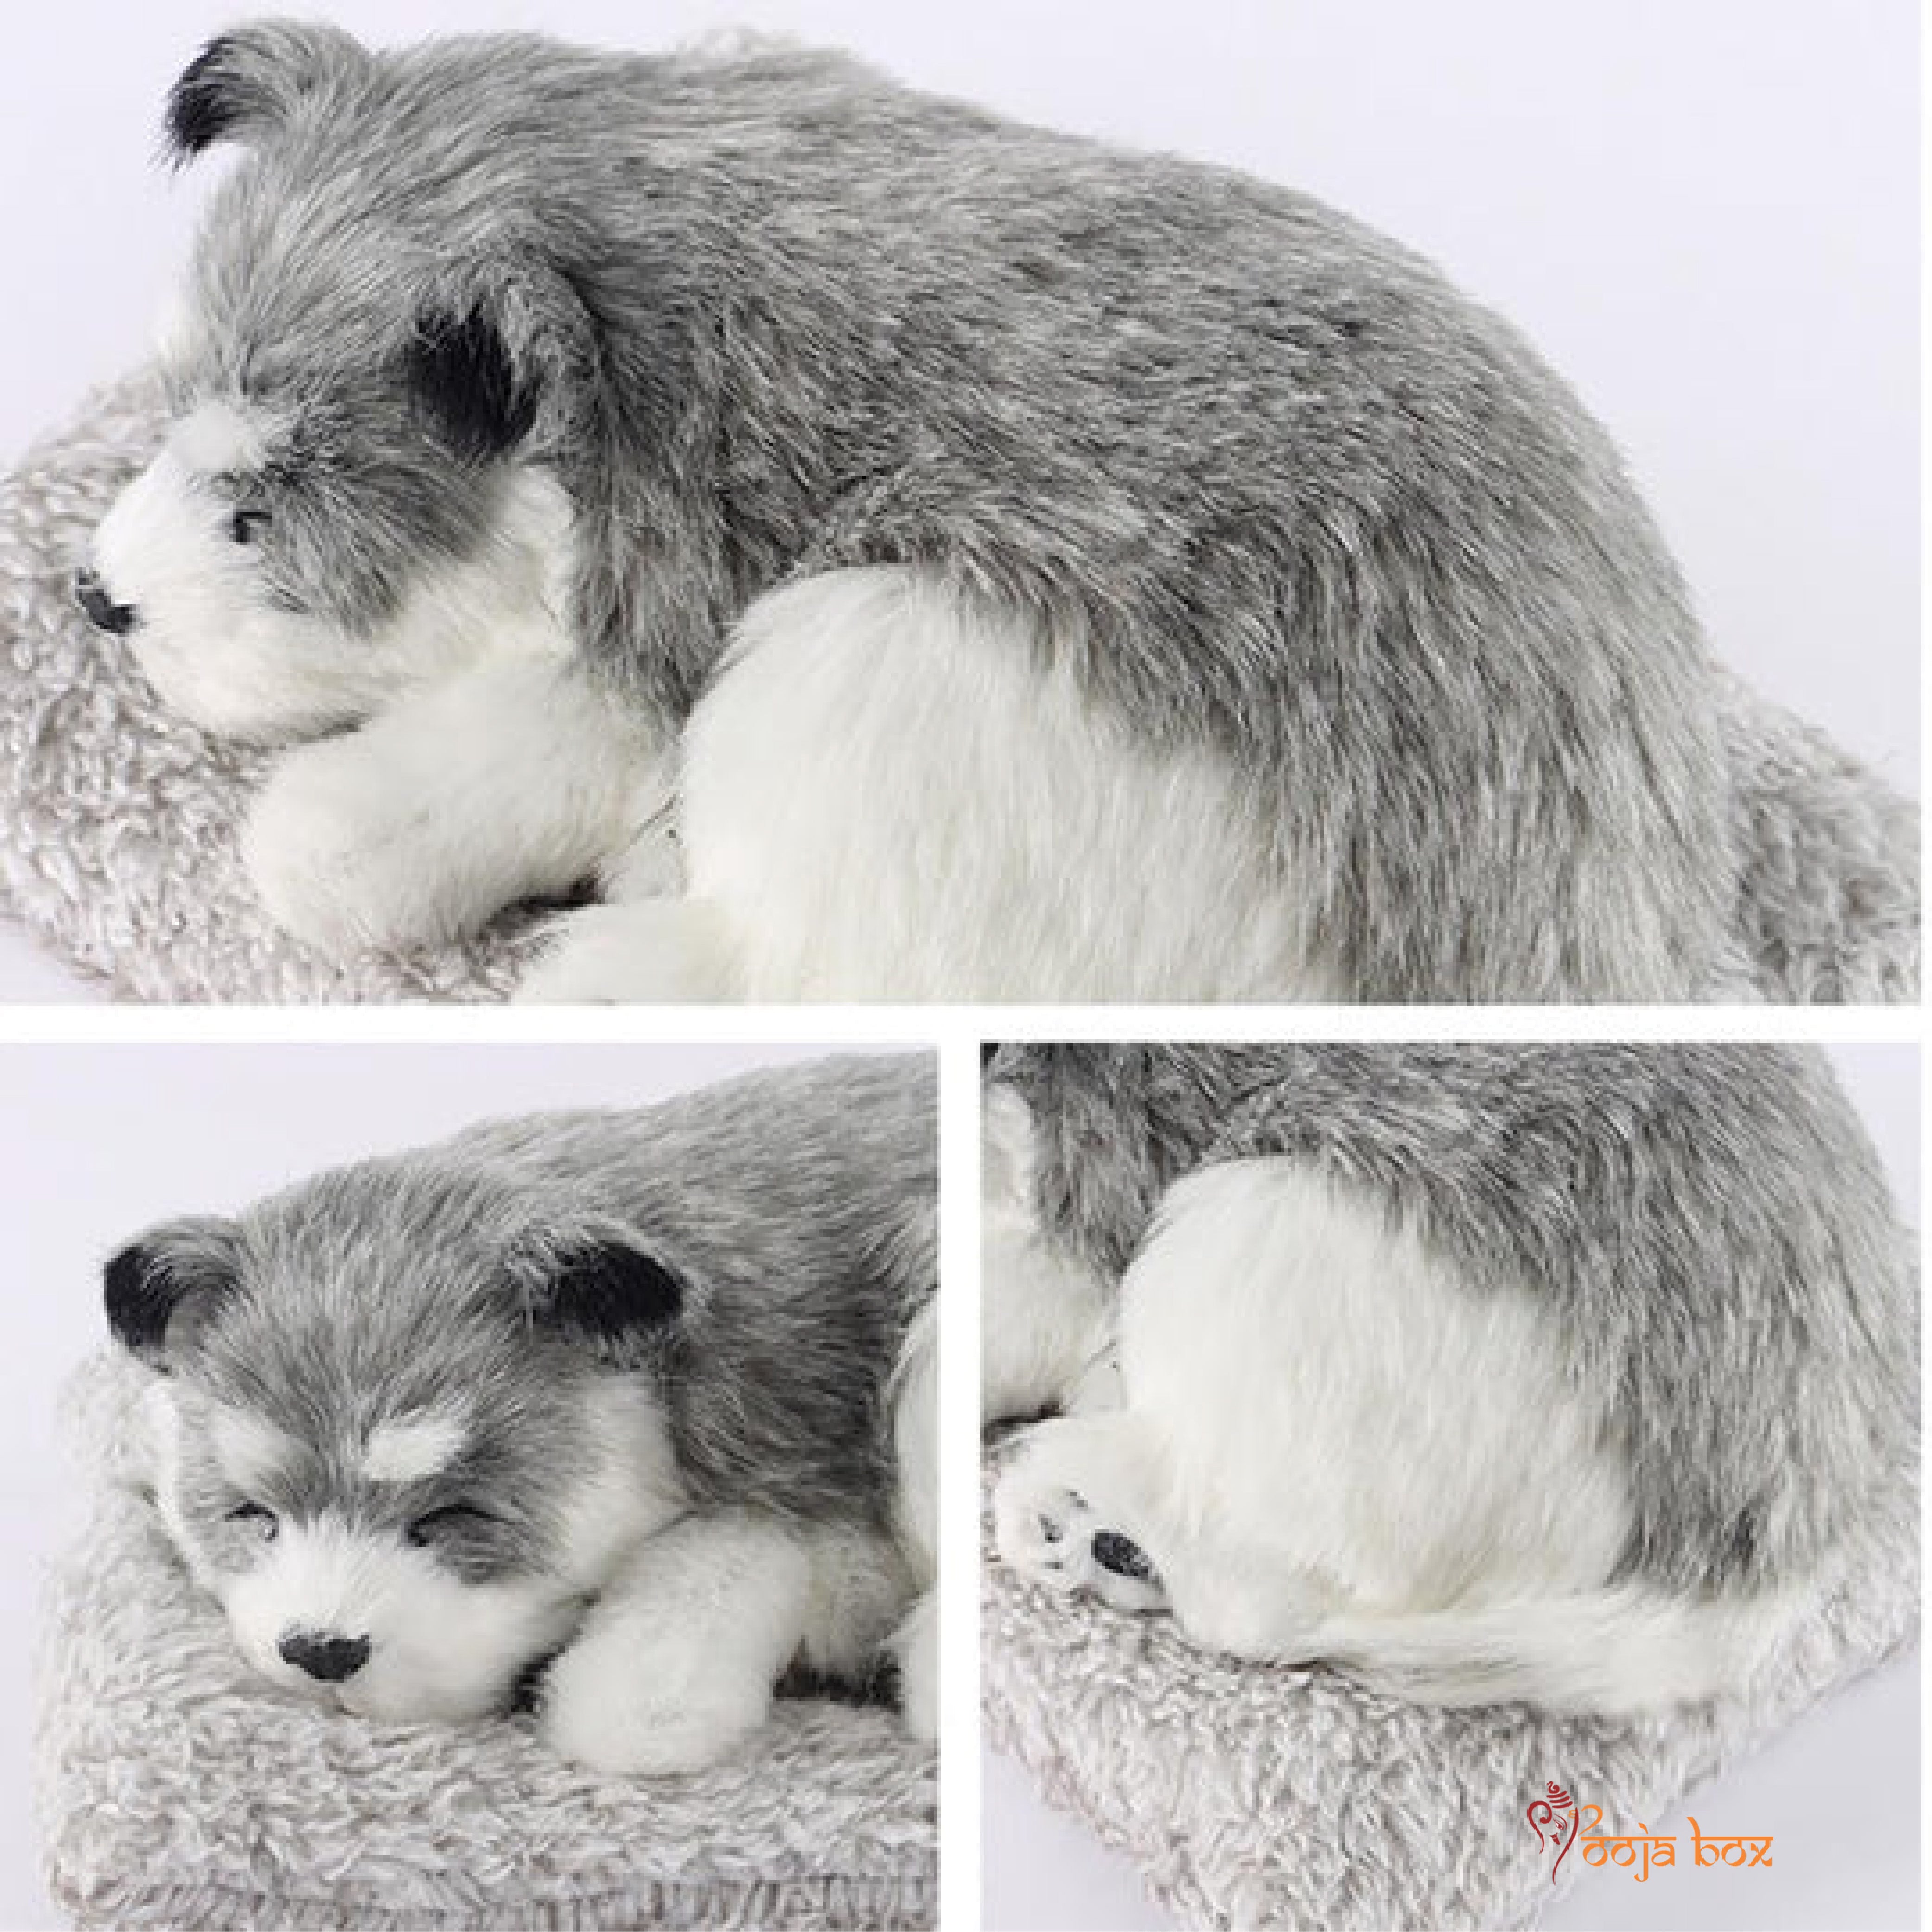 Realistic Sleeping Plush Toy Breathing Furry Dog Stuffed